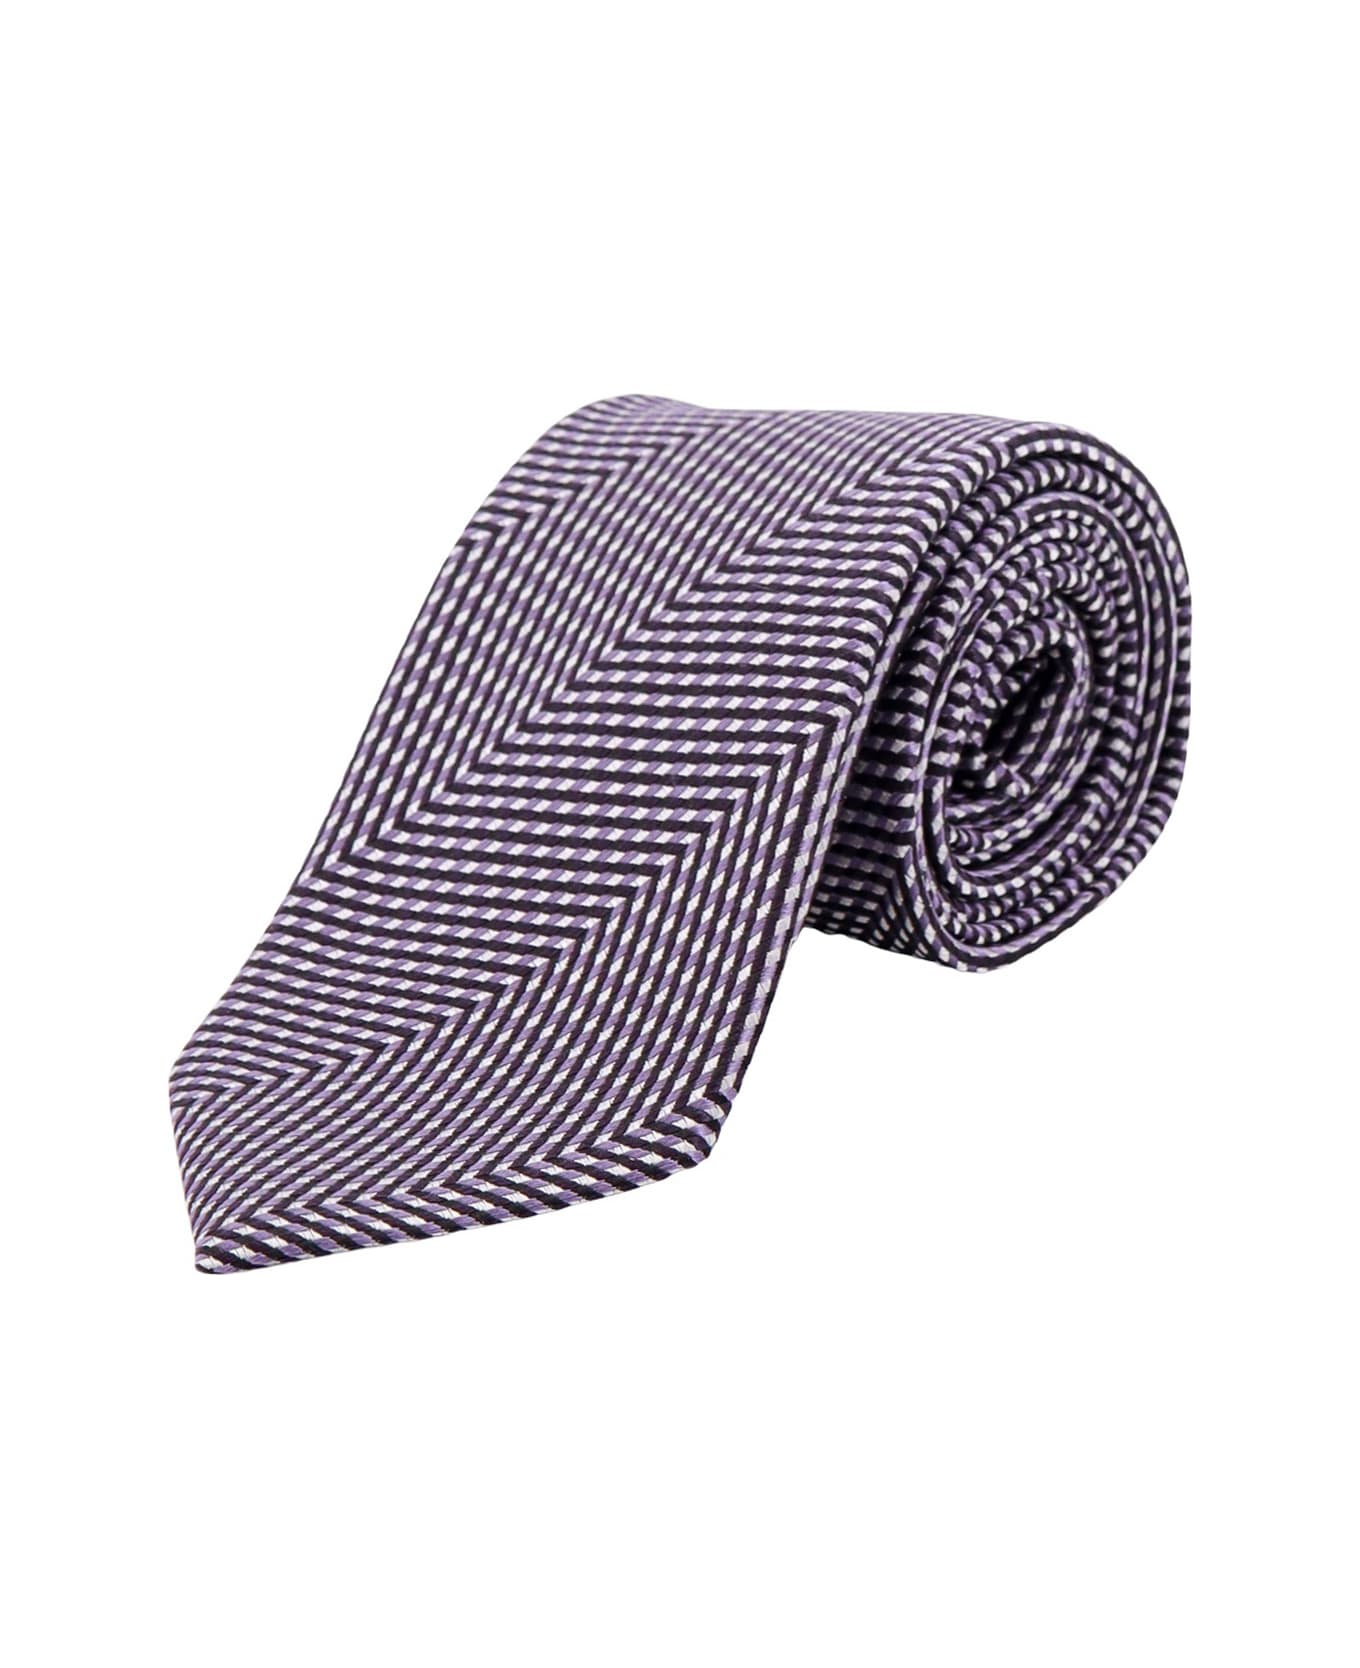 Tom Ford Tie - Purple